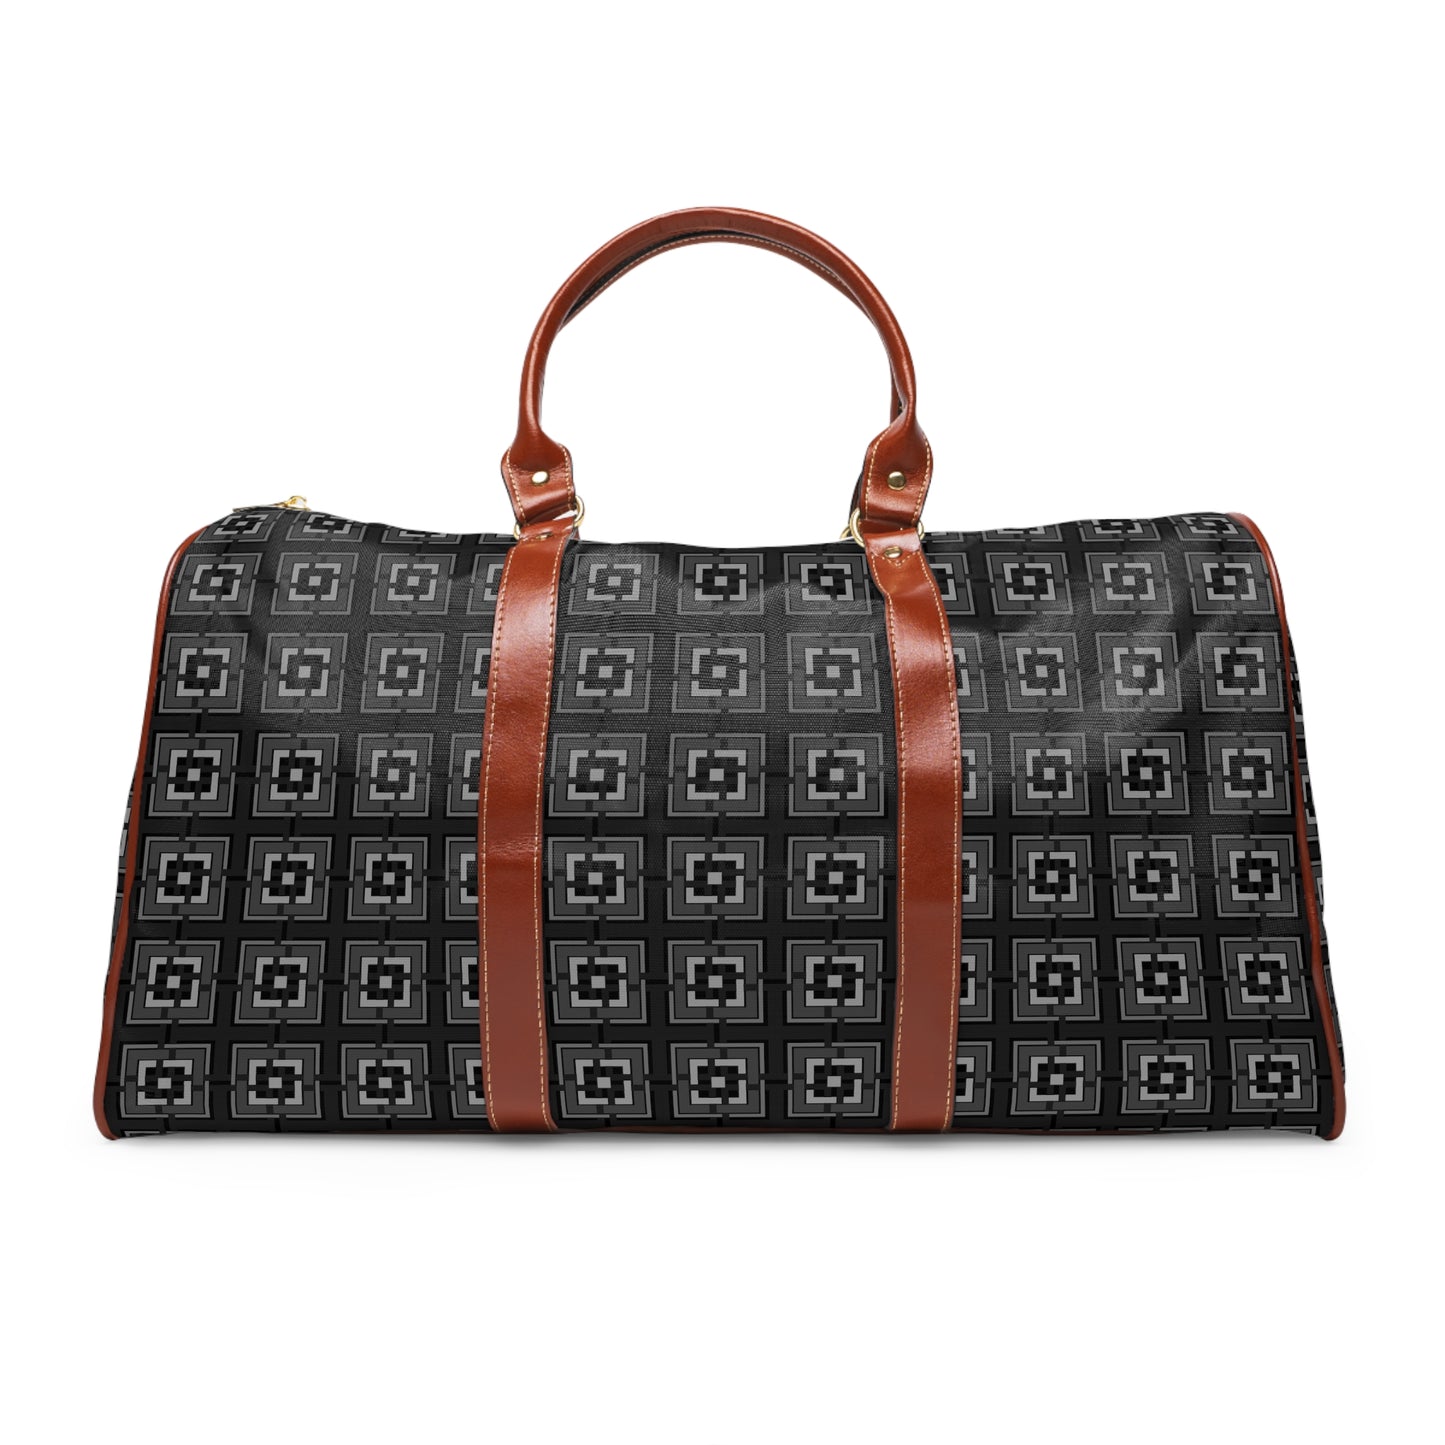 Intersecting Squares - Gray - Black 000000 - Waterproof Travel Bag